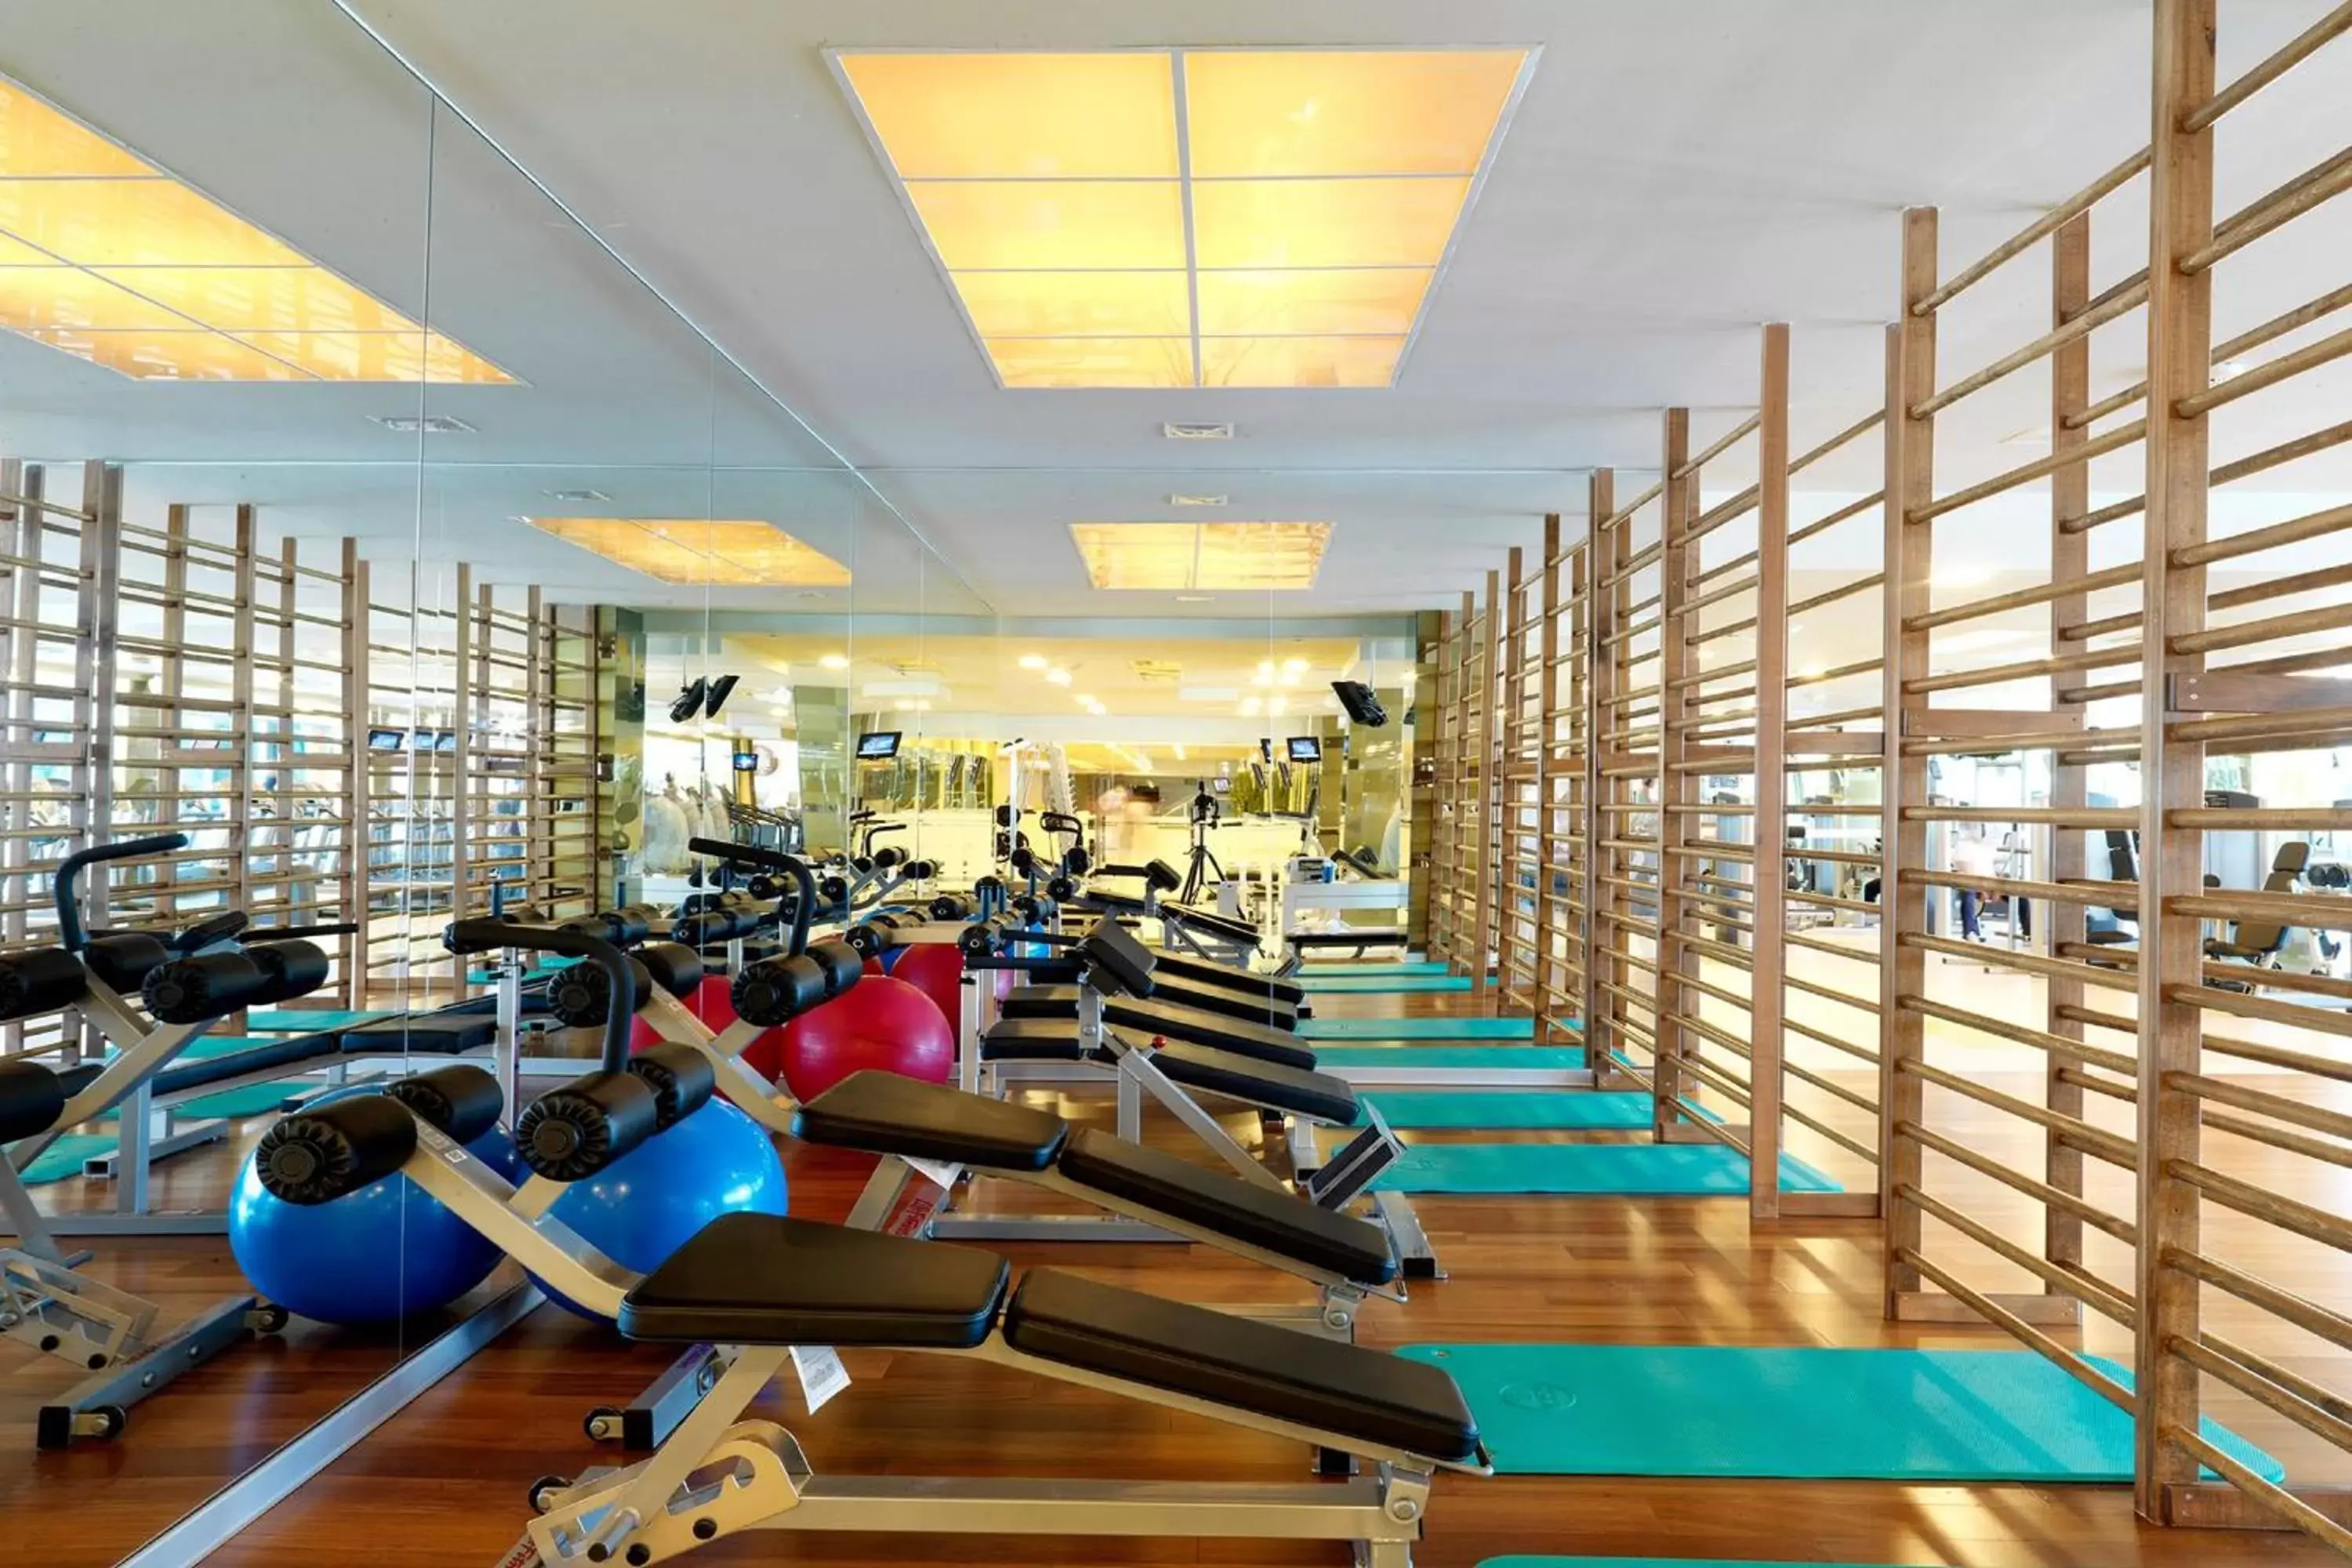 Fitness centre/facilities, Fitness Center/Facilities in Renaissance Polat Istanbul Hotel